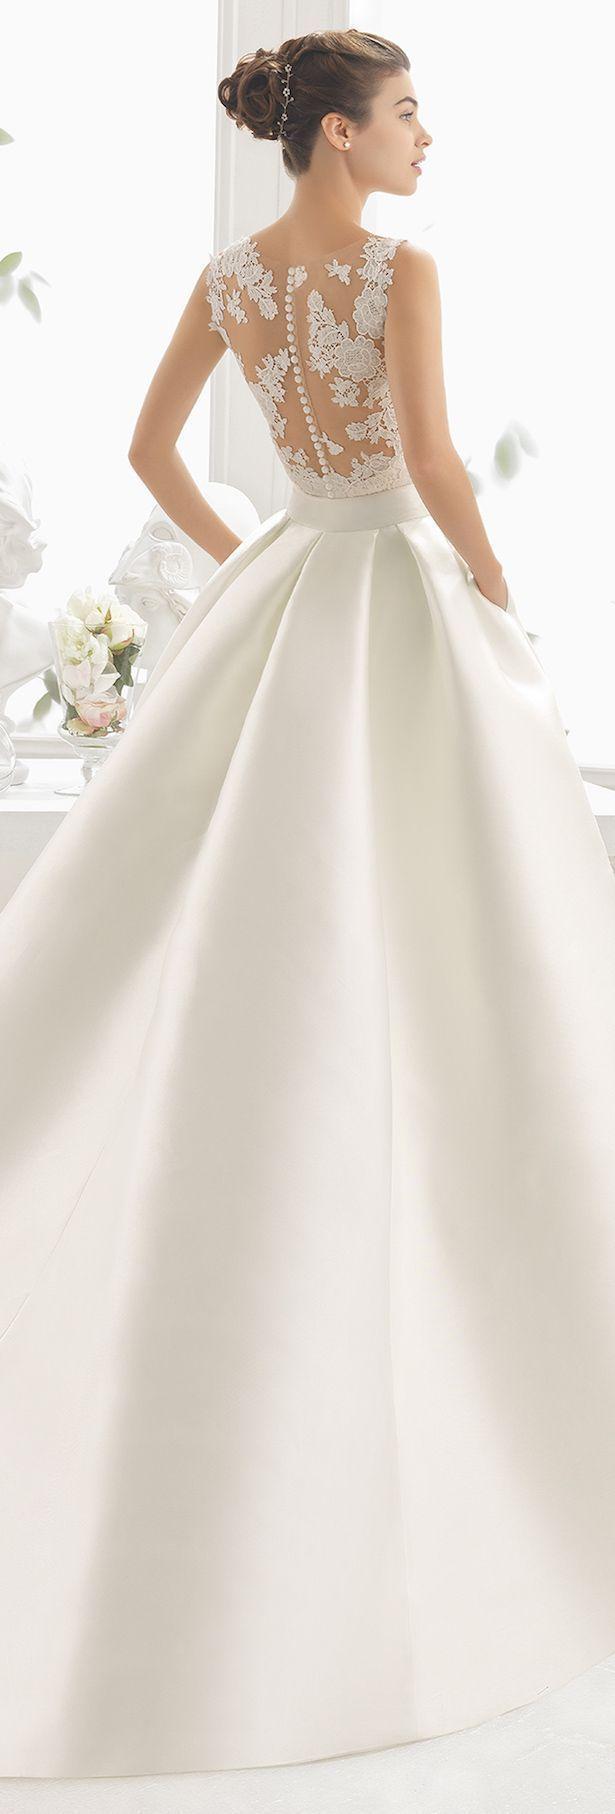 Hochzeit - Wedding Dress By Aire Barcelona 2017 Bridal Collection #weddingdress 